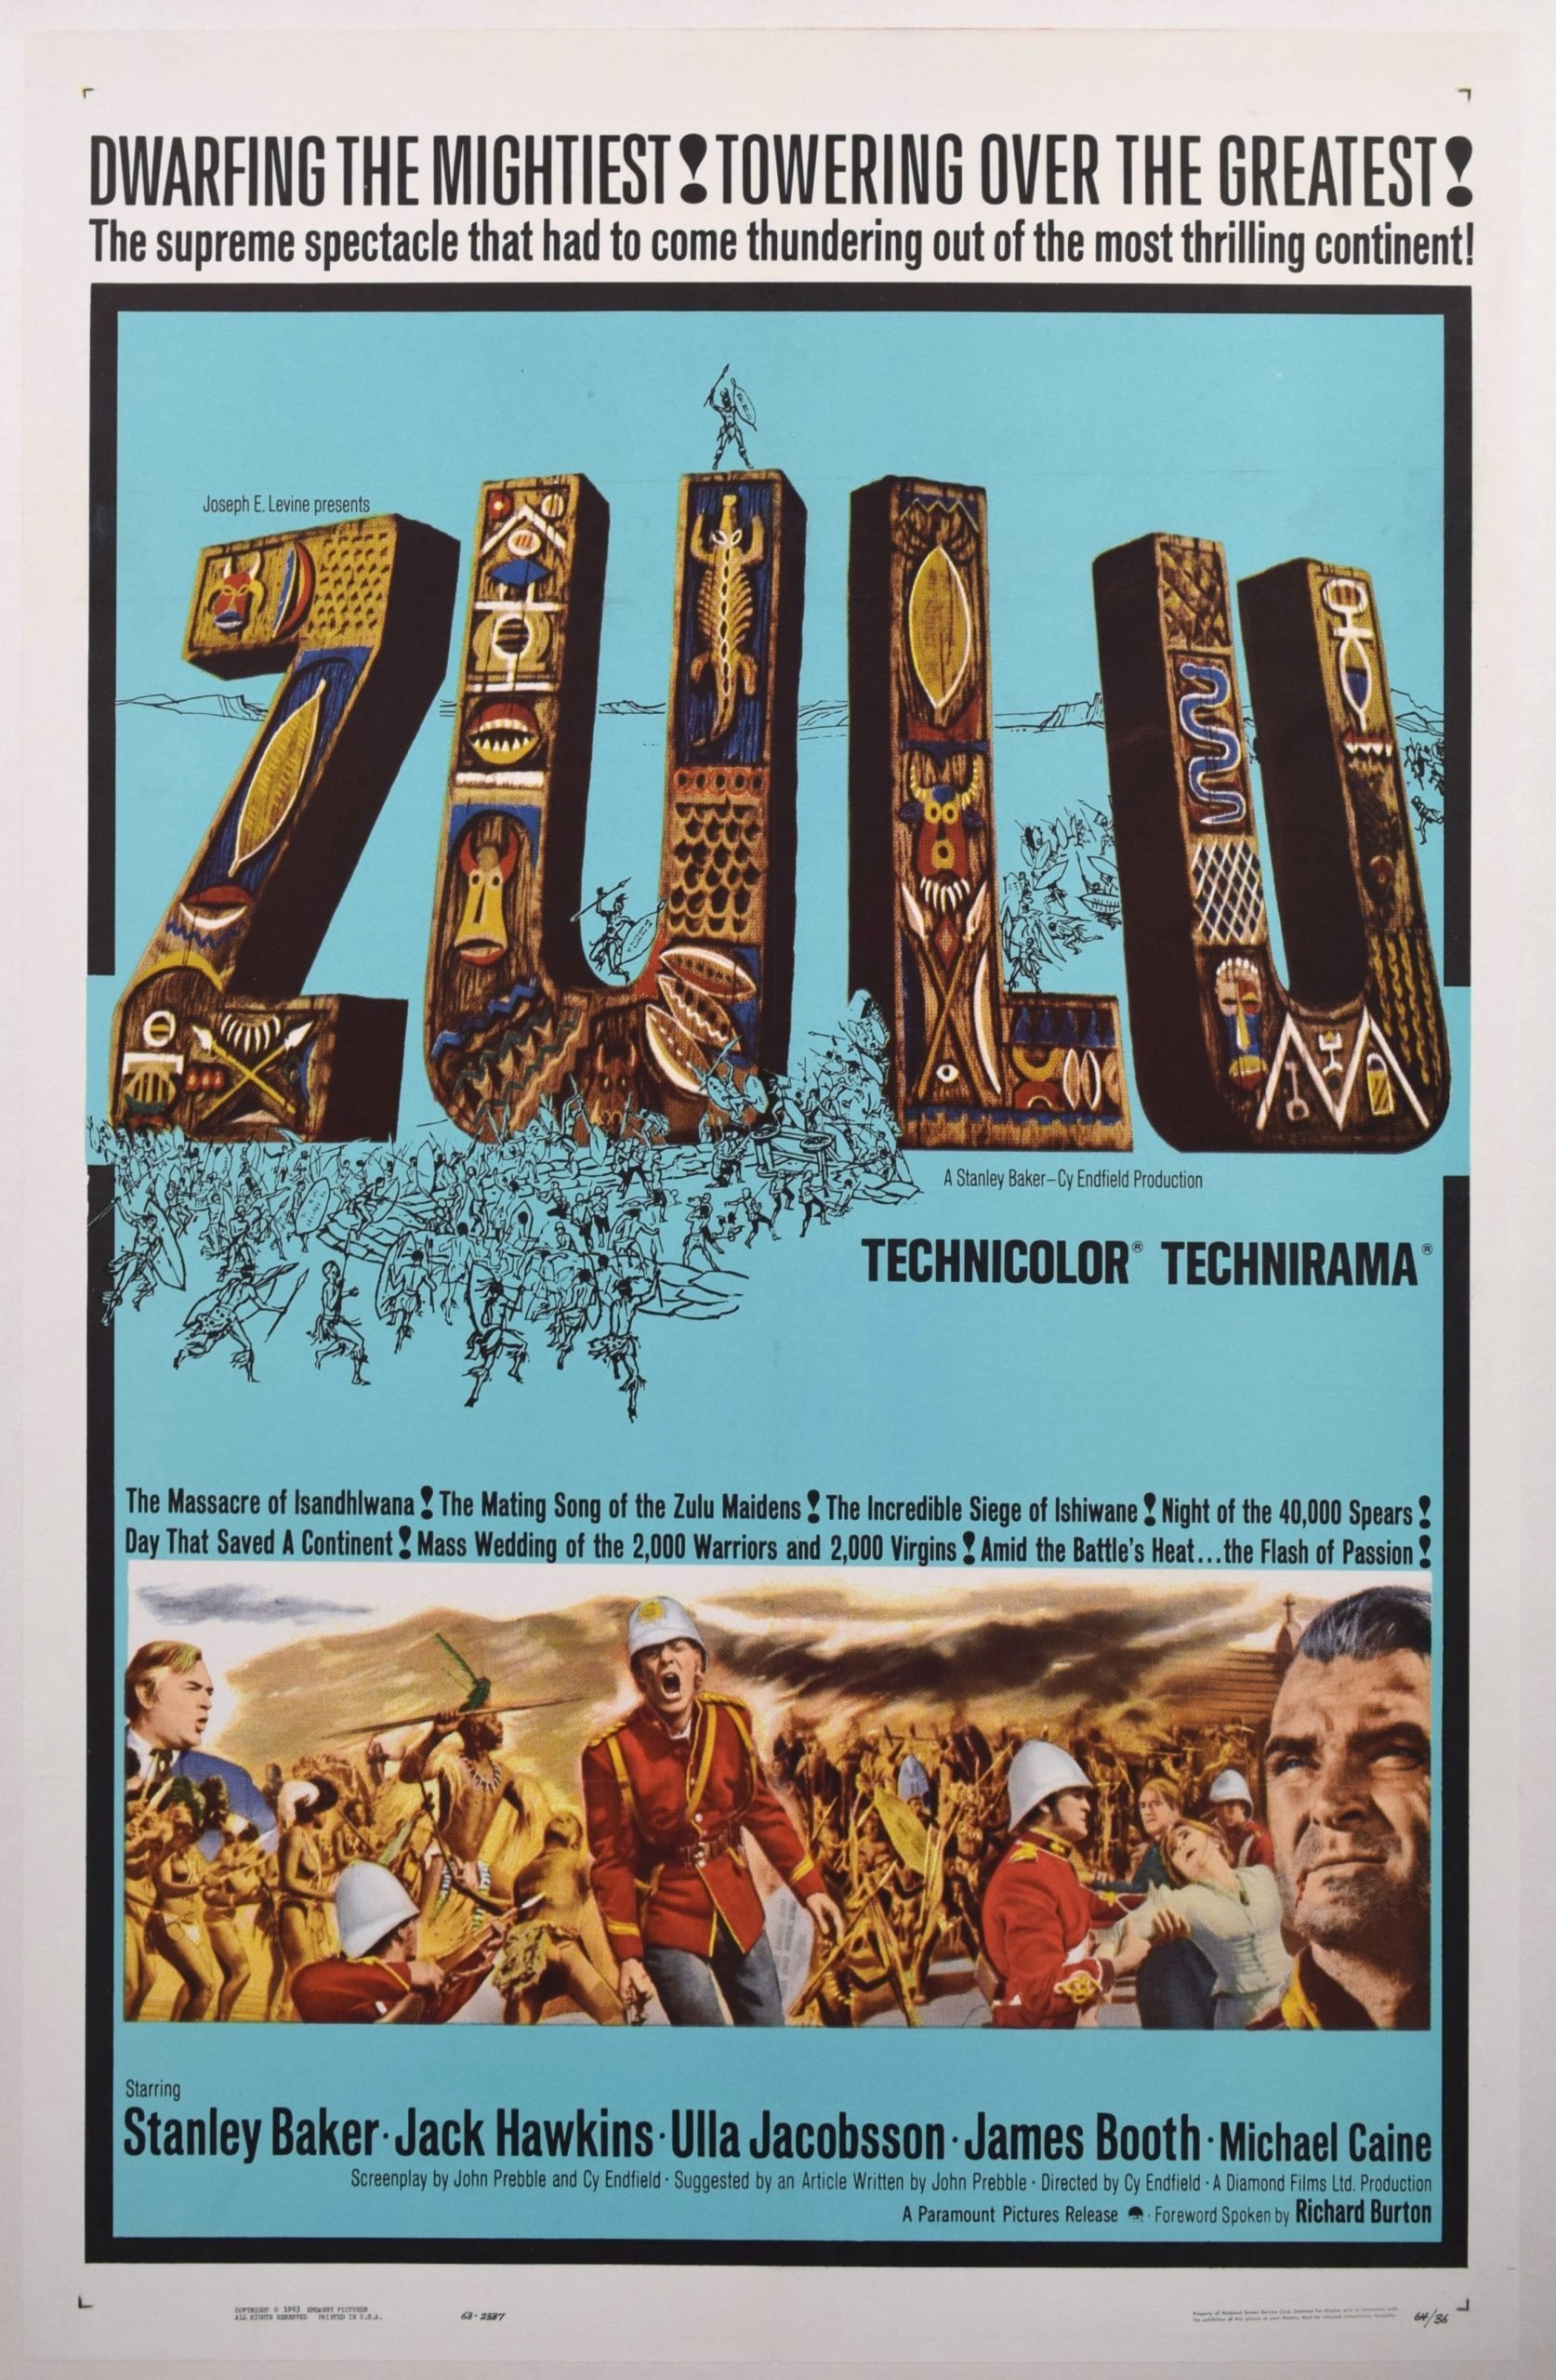 Vintage original US cinema poster for 1964 film Zulu starring Michael Caine